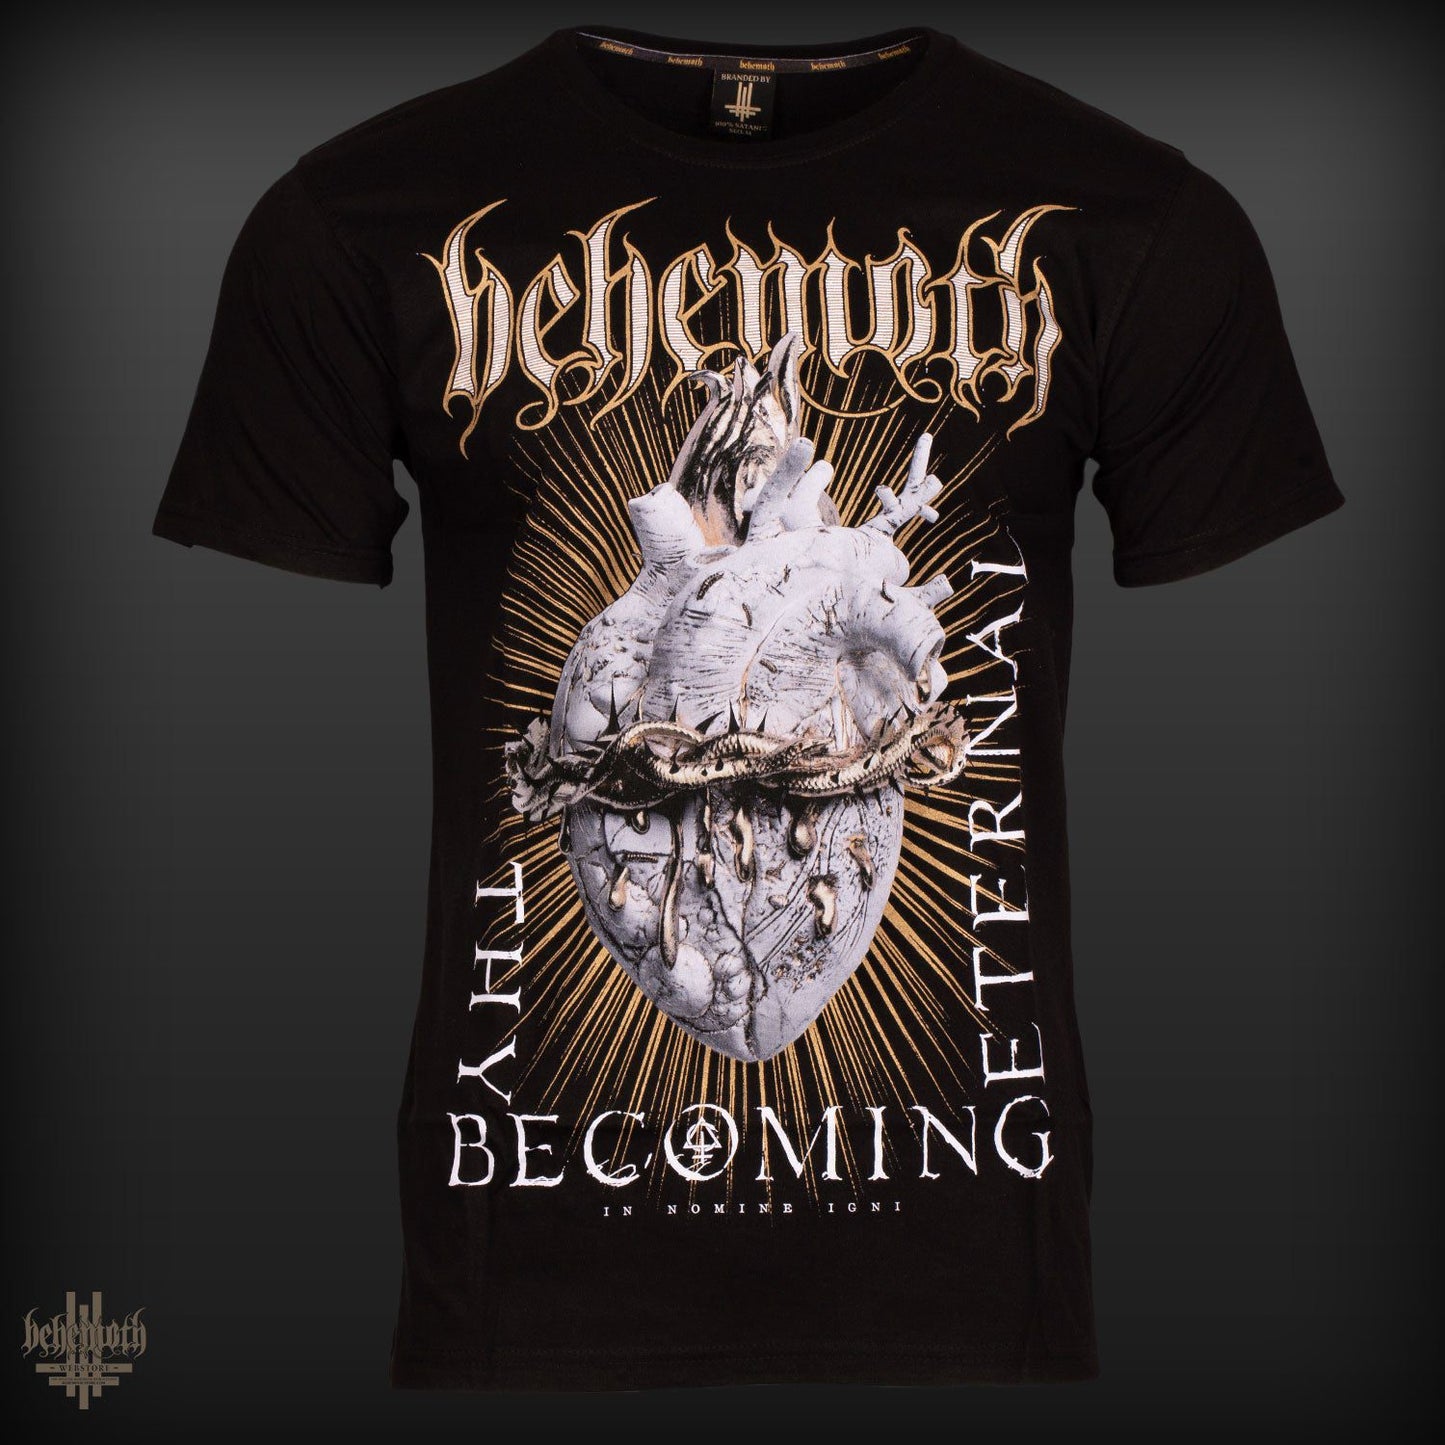 'Thy Becoming Eternal' Behemoth T-Shirt